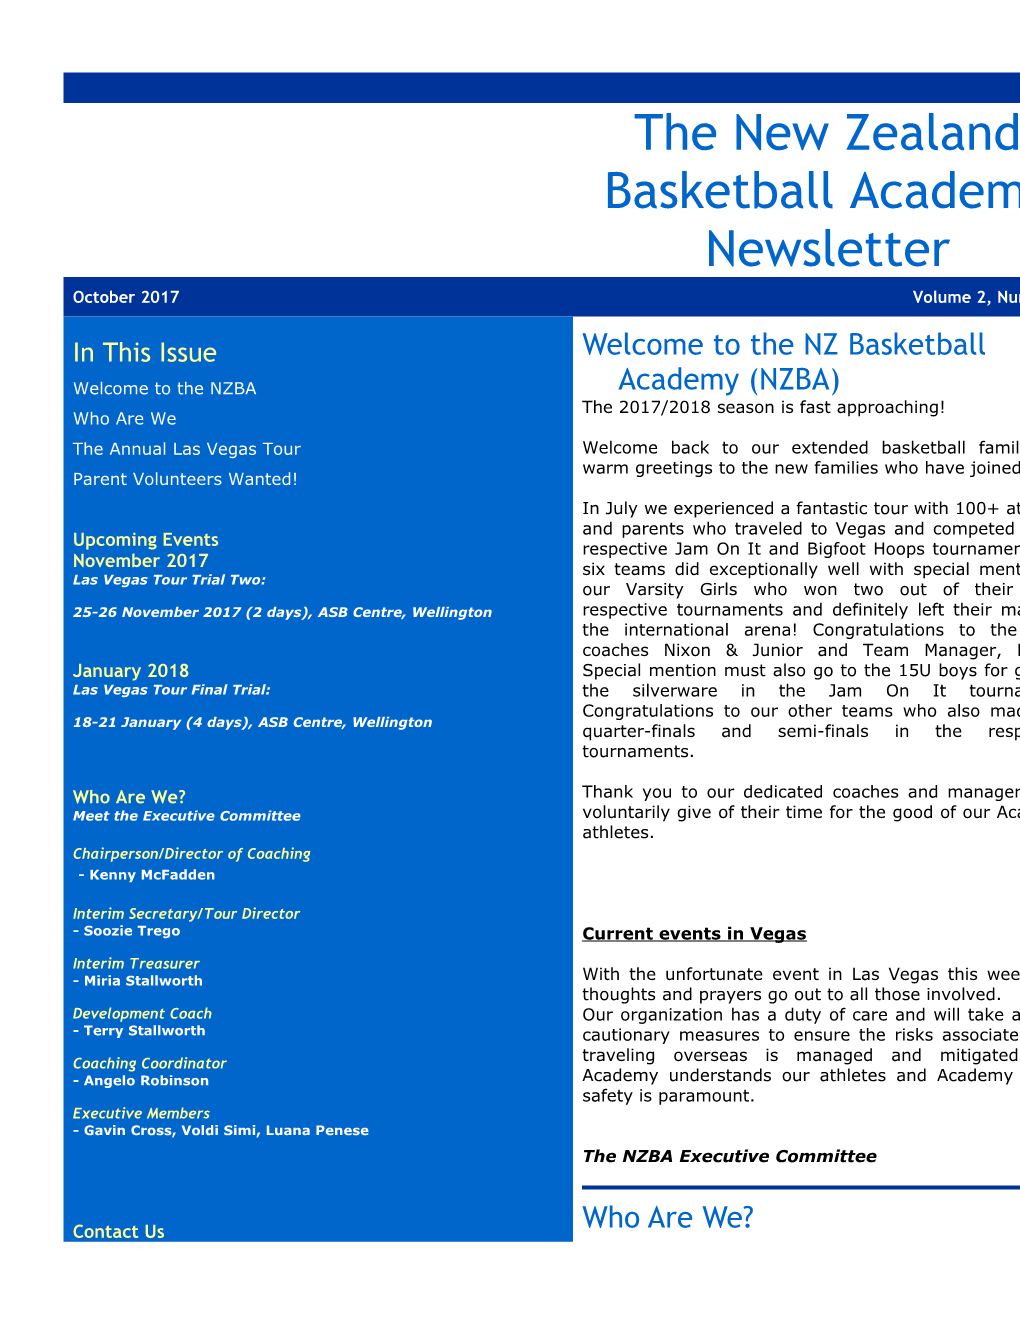 Welcome to the NZ Basketball Academy (NZBA)